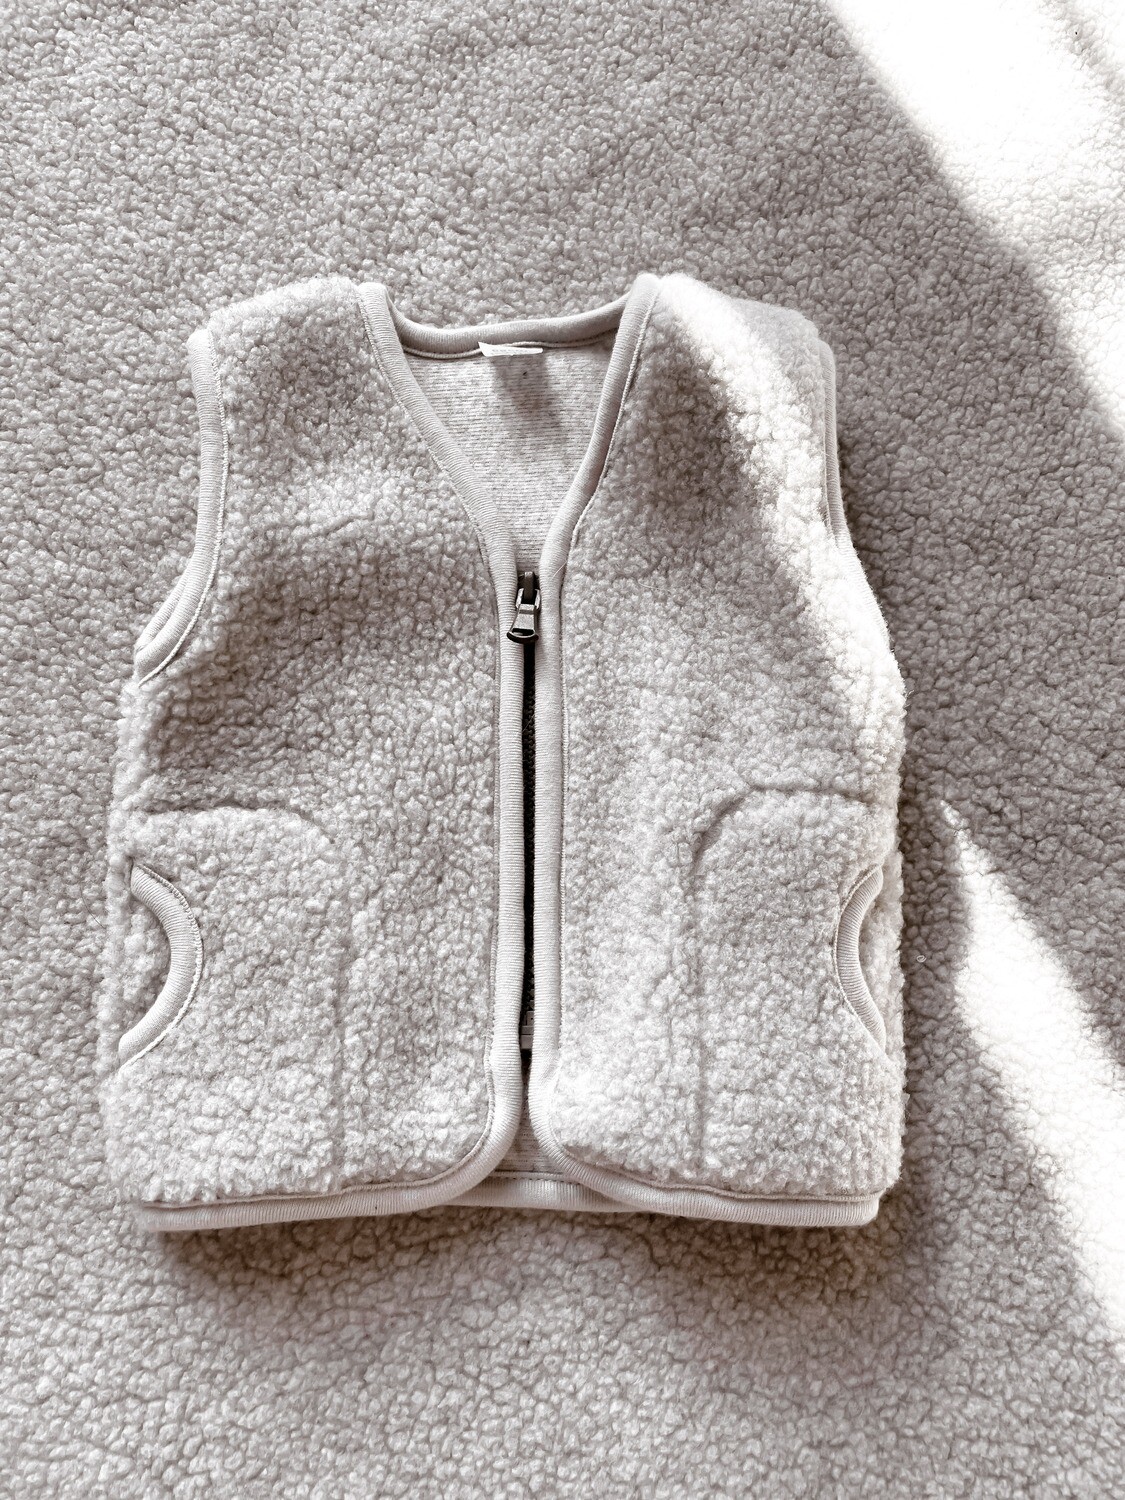 Warm vest #snuggle